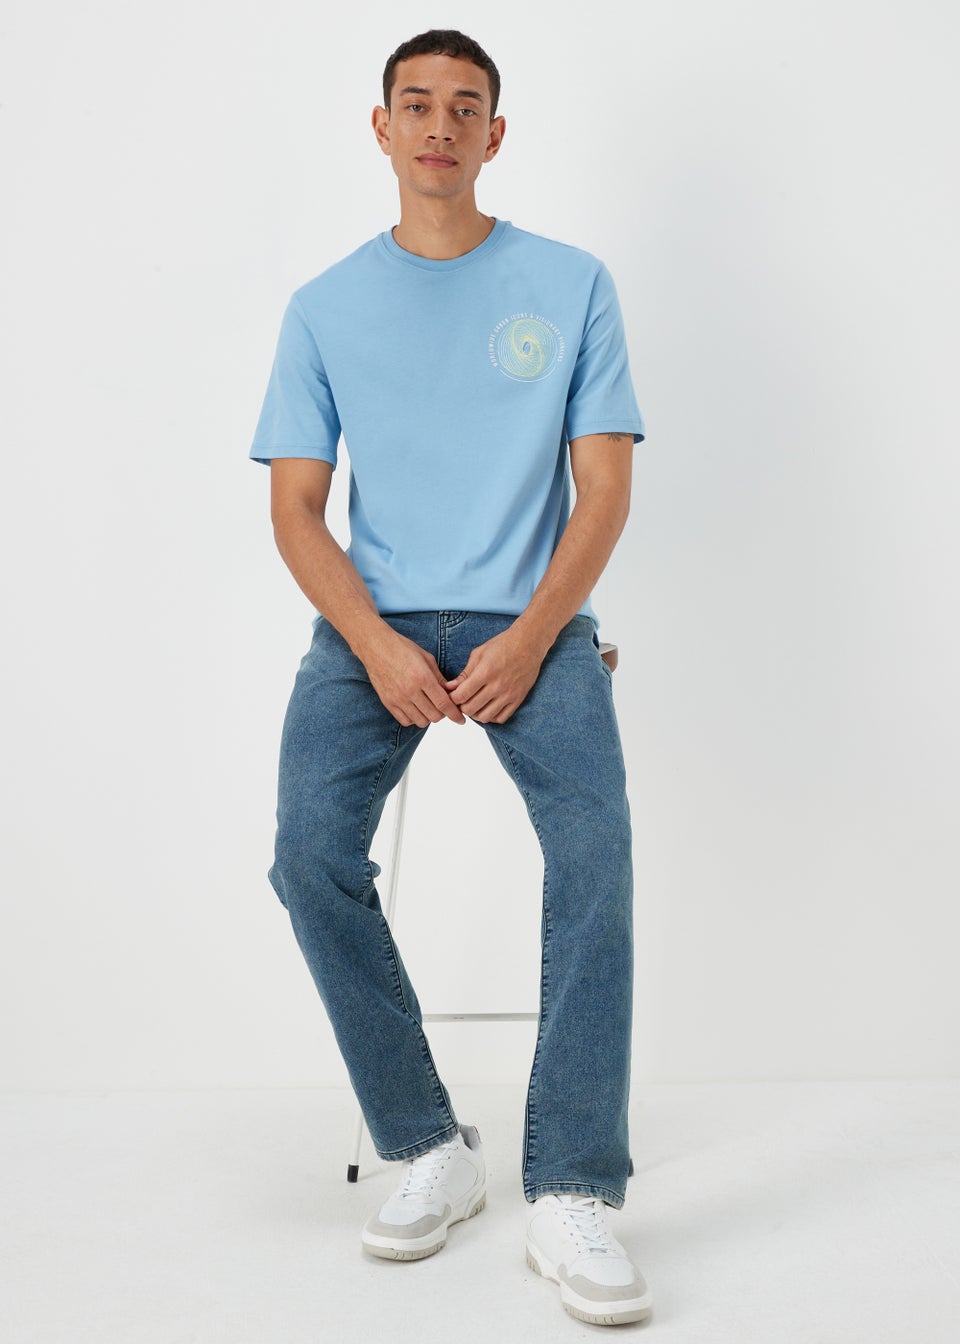 US Athletic Light Blue Graphic T-Shirt - Matalan